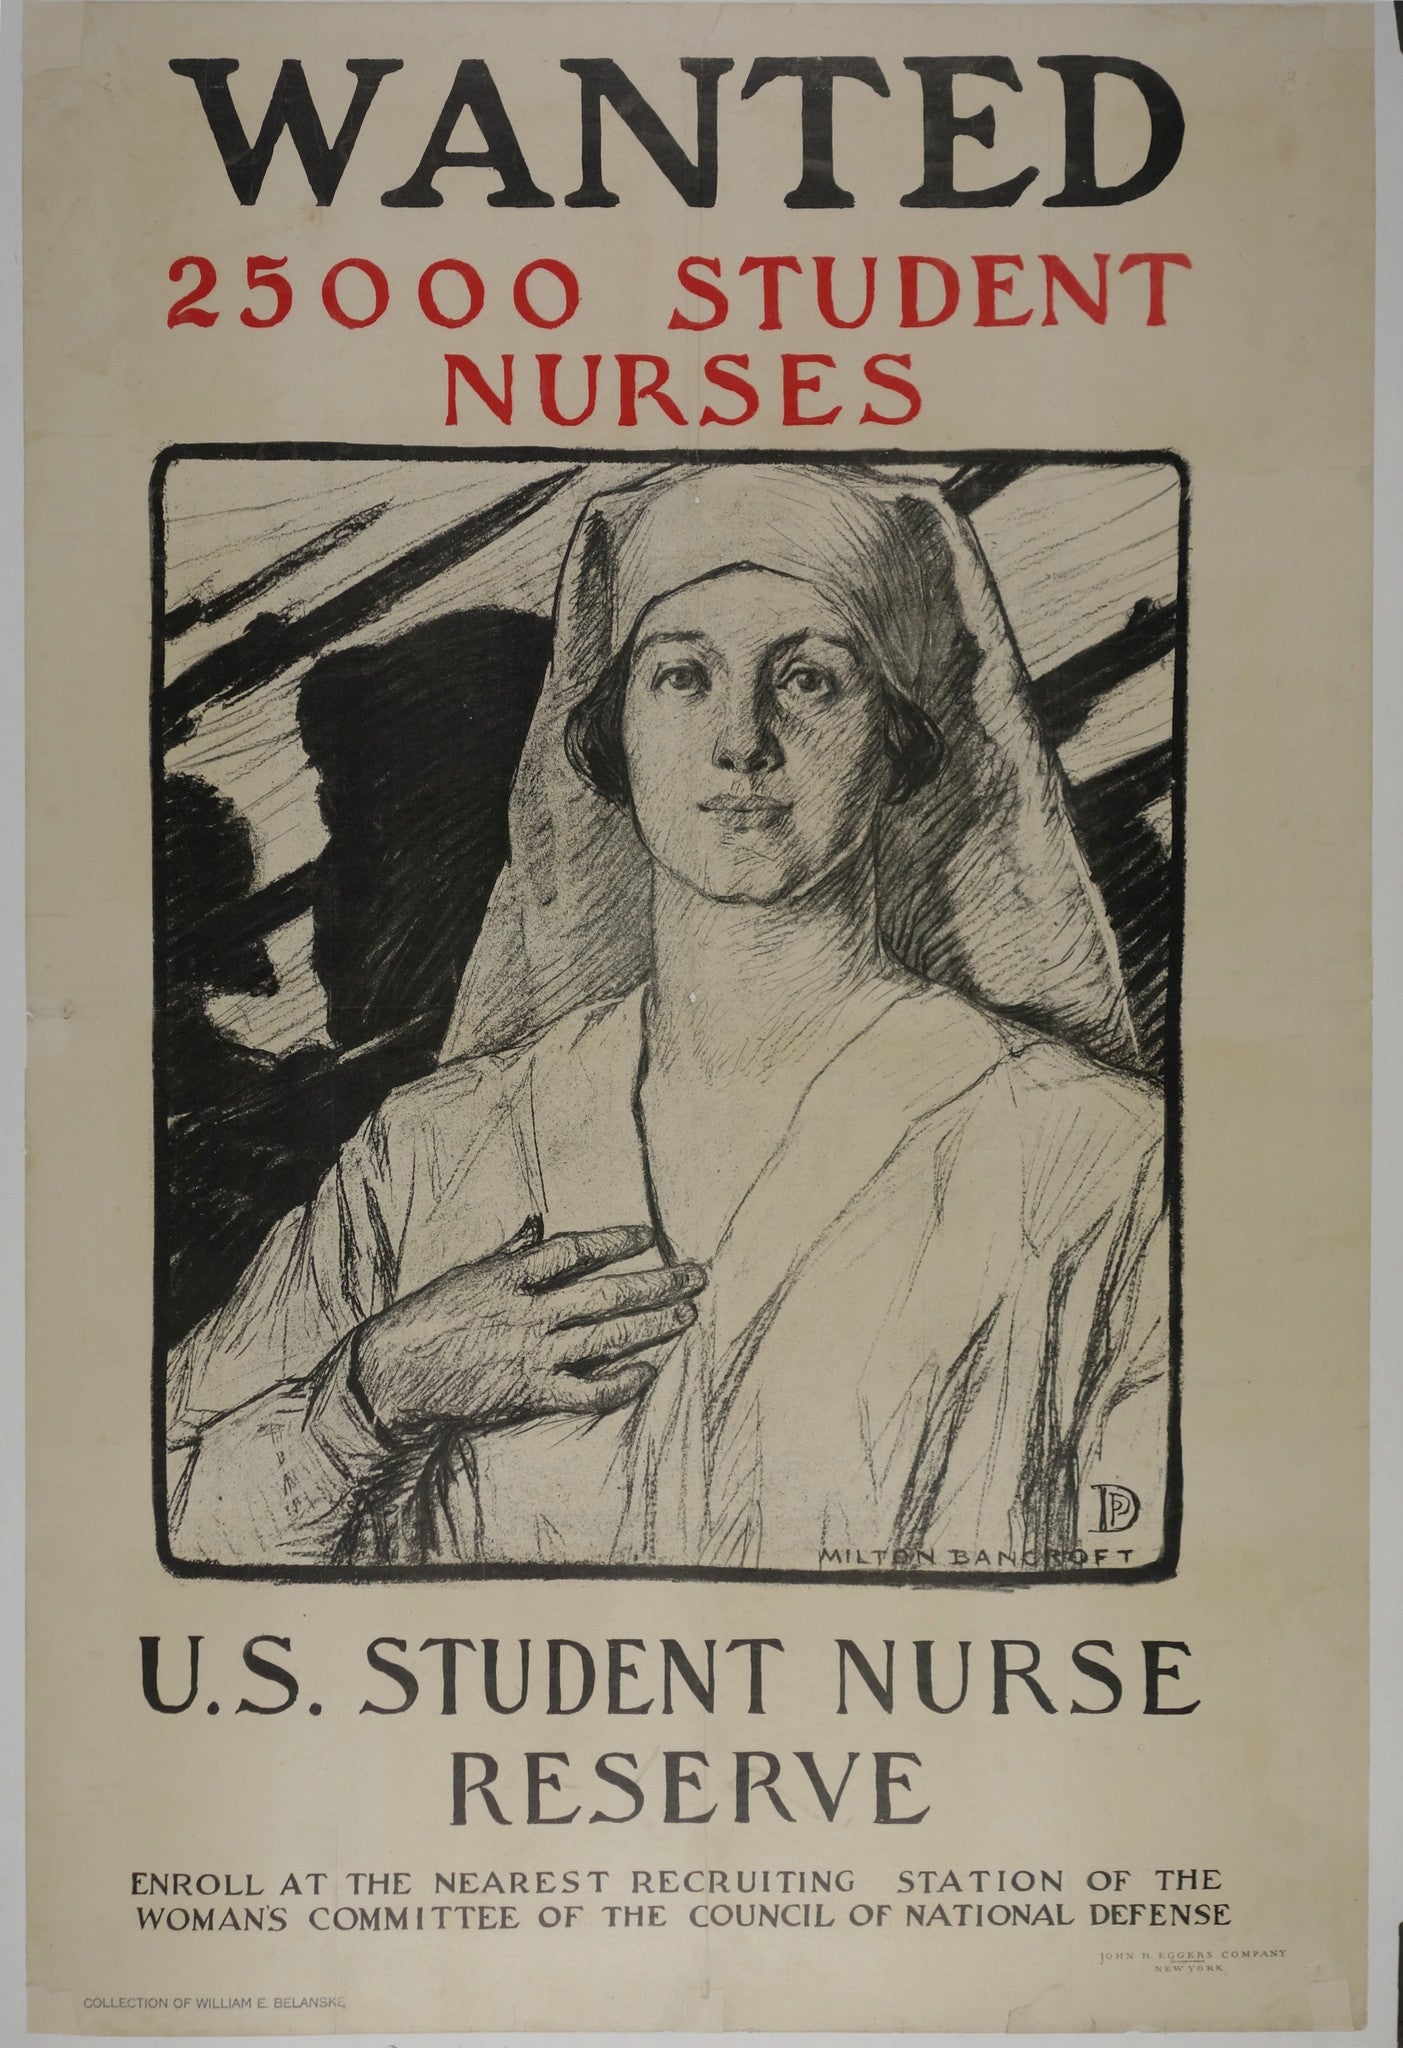 Nurses Wanted